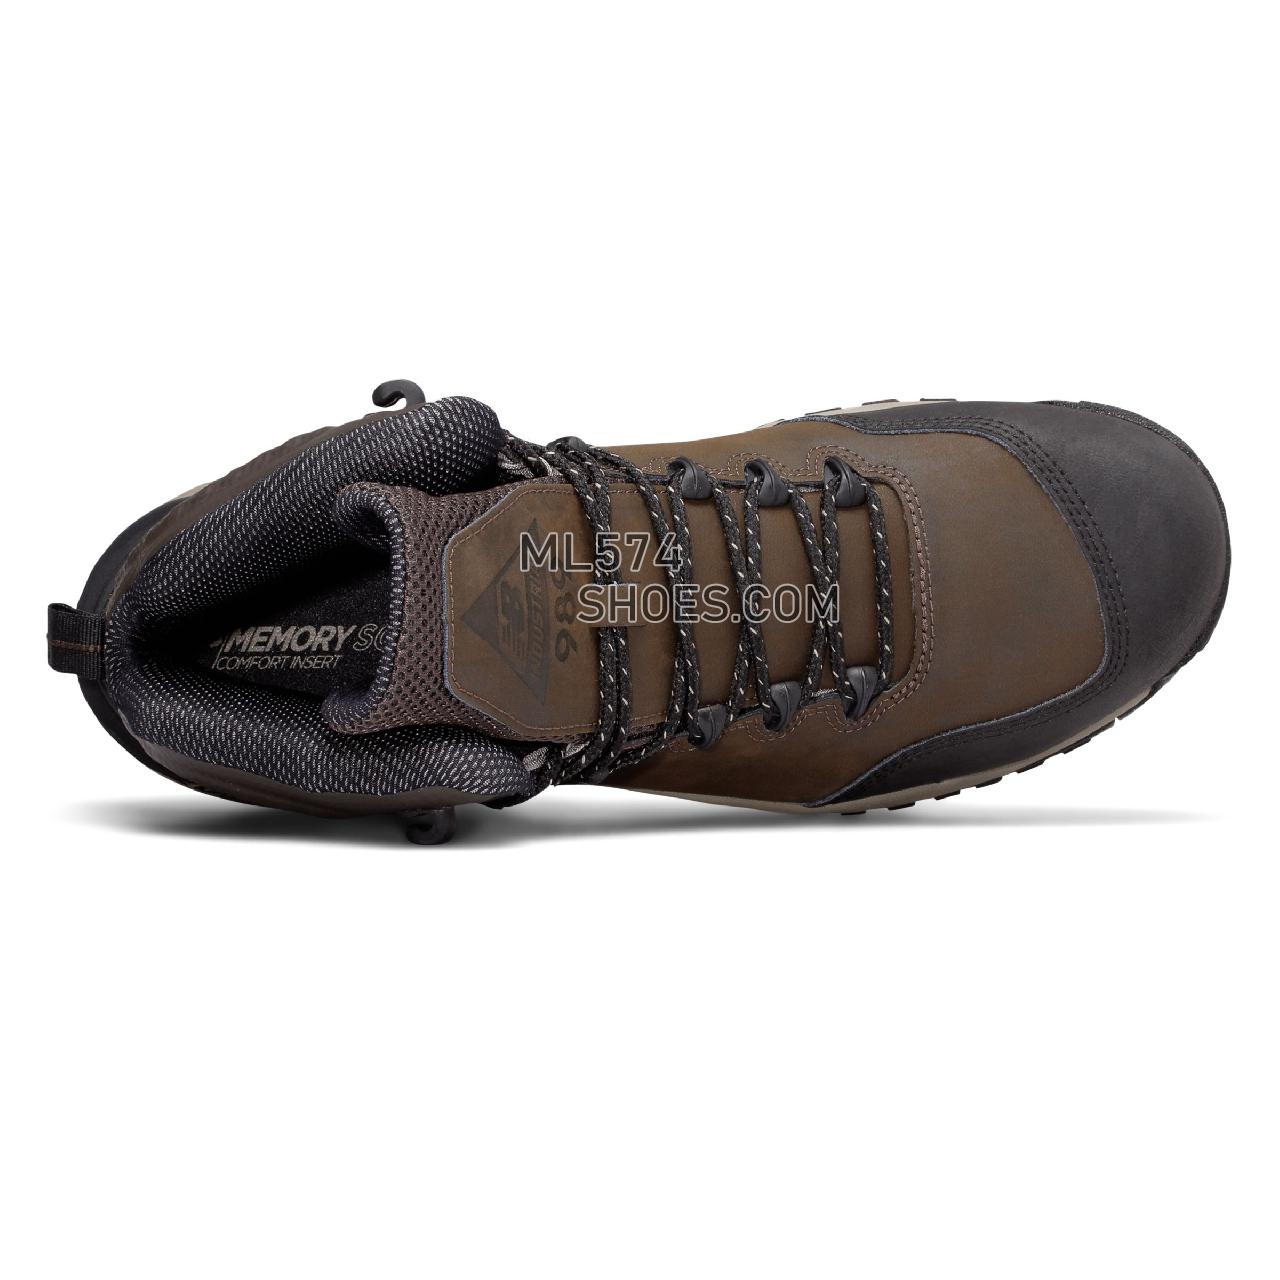 New Balance Composite Toe 989 - Men's 989 - Industrial Brown - MID989B1